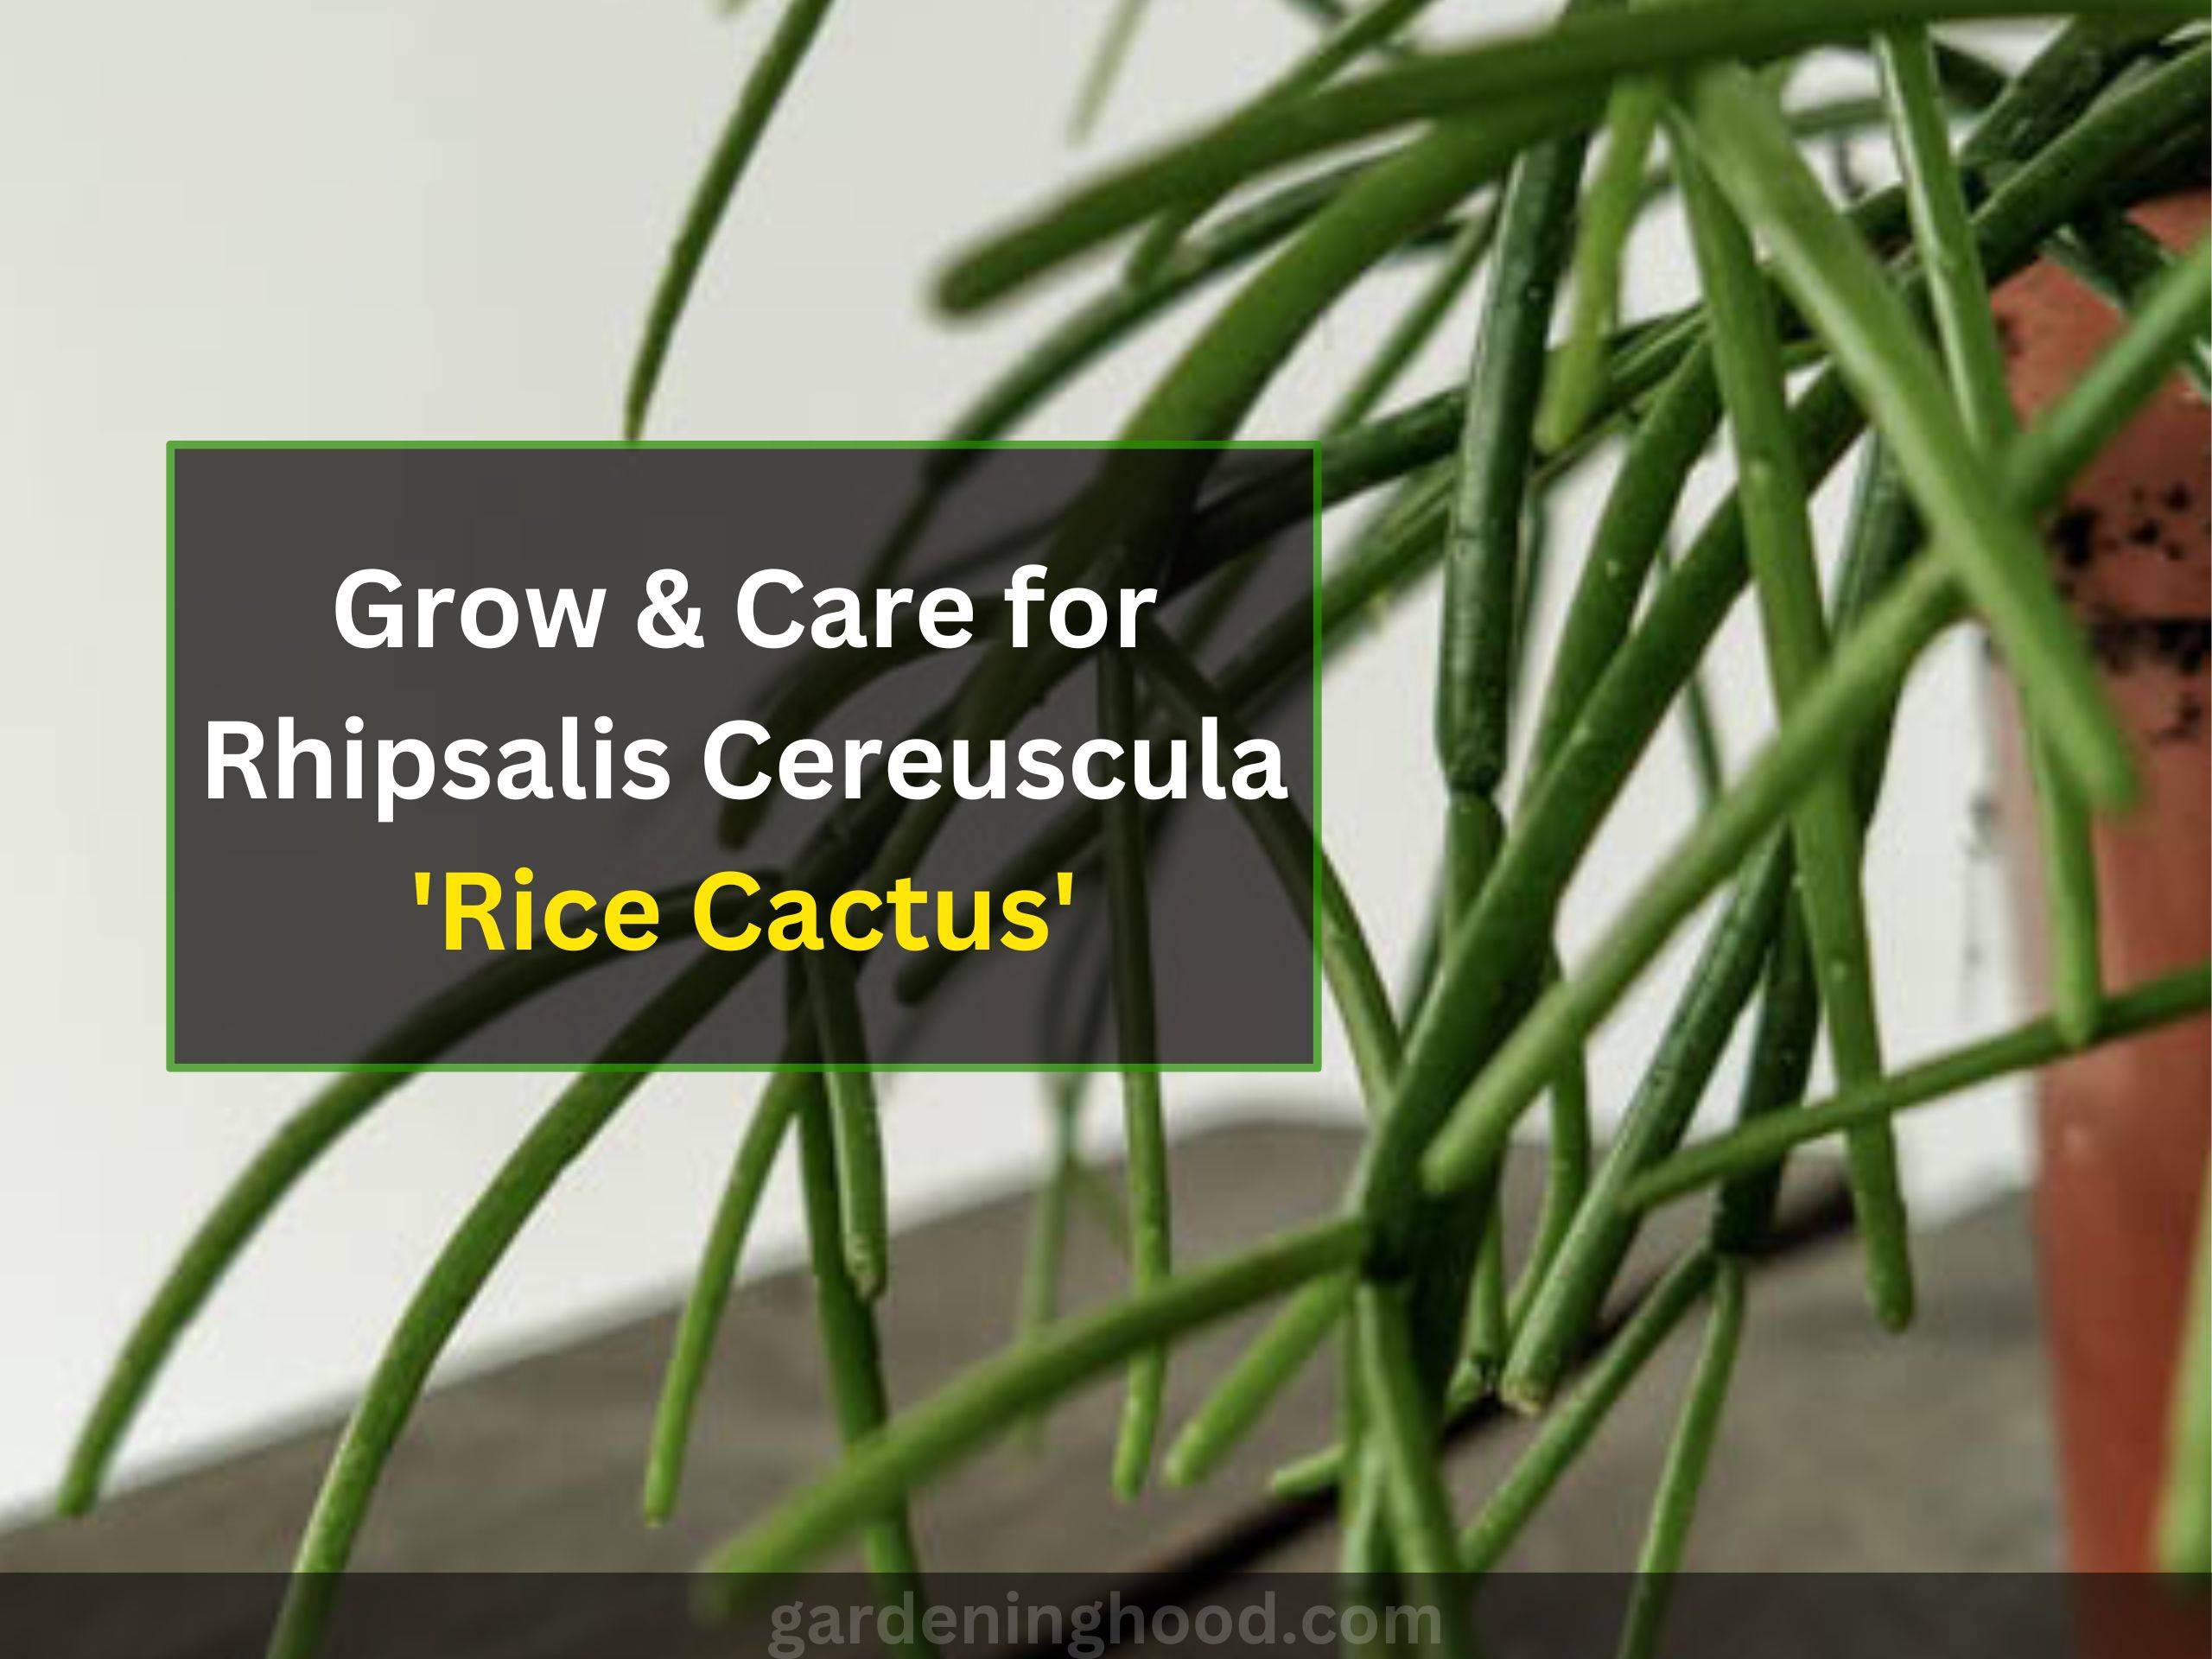 Grow & Care for Rhipsalis Cereuscula 'Rice Cactus'